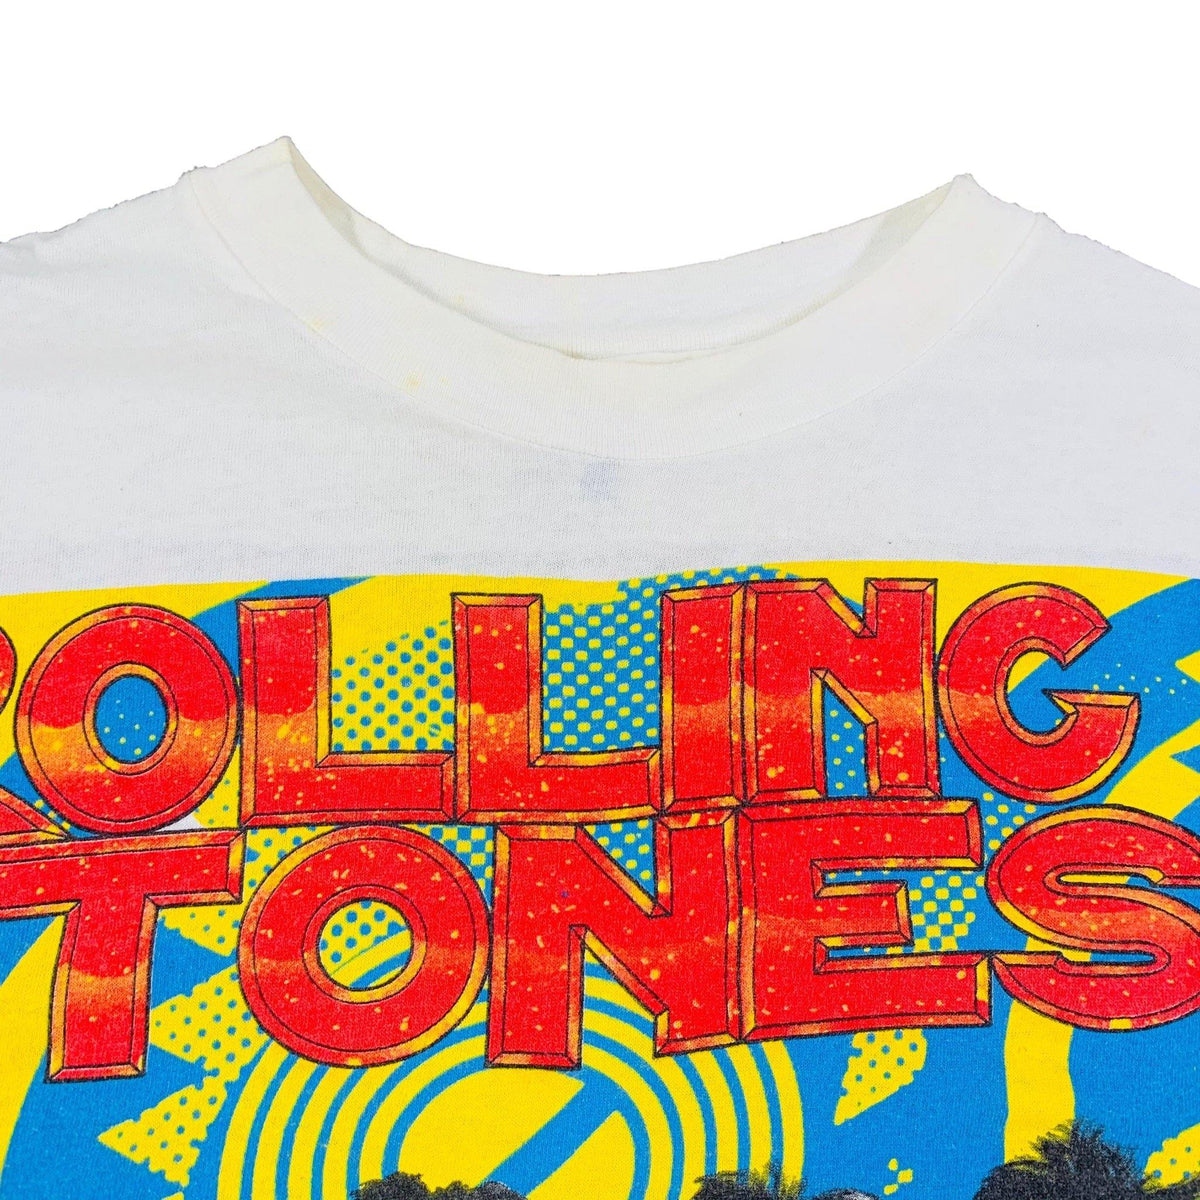 Vintage Rolling Stones &quot;Steel Wheels&quot; Tour T-Shirt - jointcustodydc